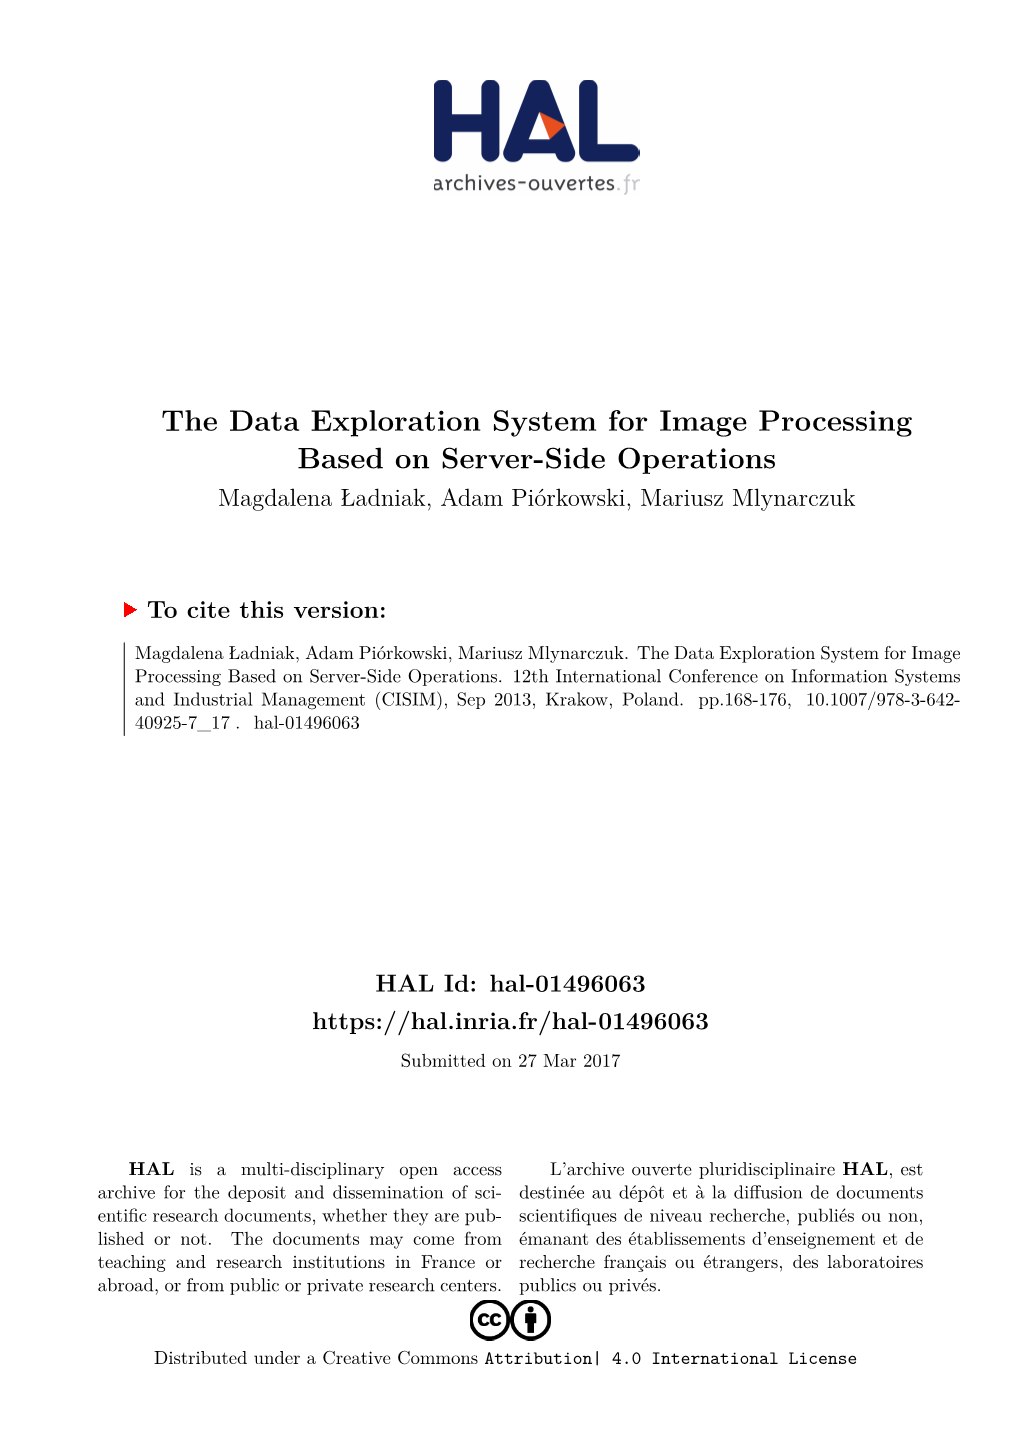 The Data Exploration System for Image Processing Based on Server-Side Operations Magdalena Ładniak, Adam Piórkowski, Mariusz Mlynarczuk